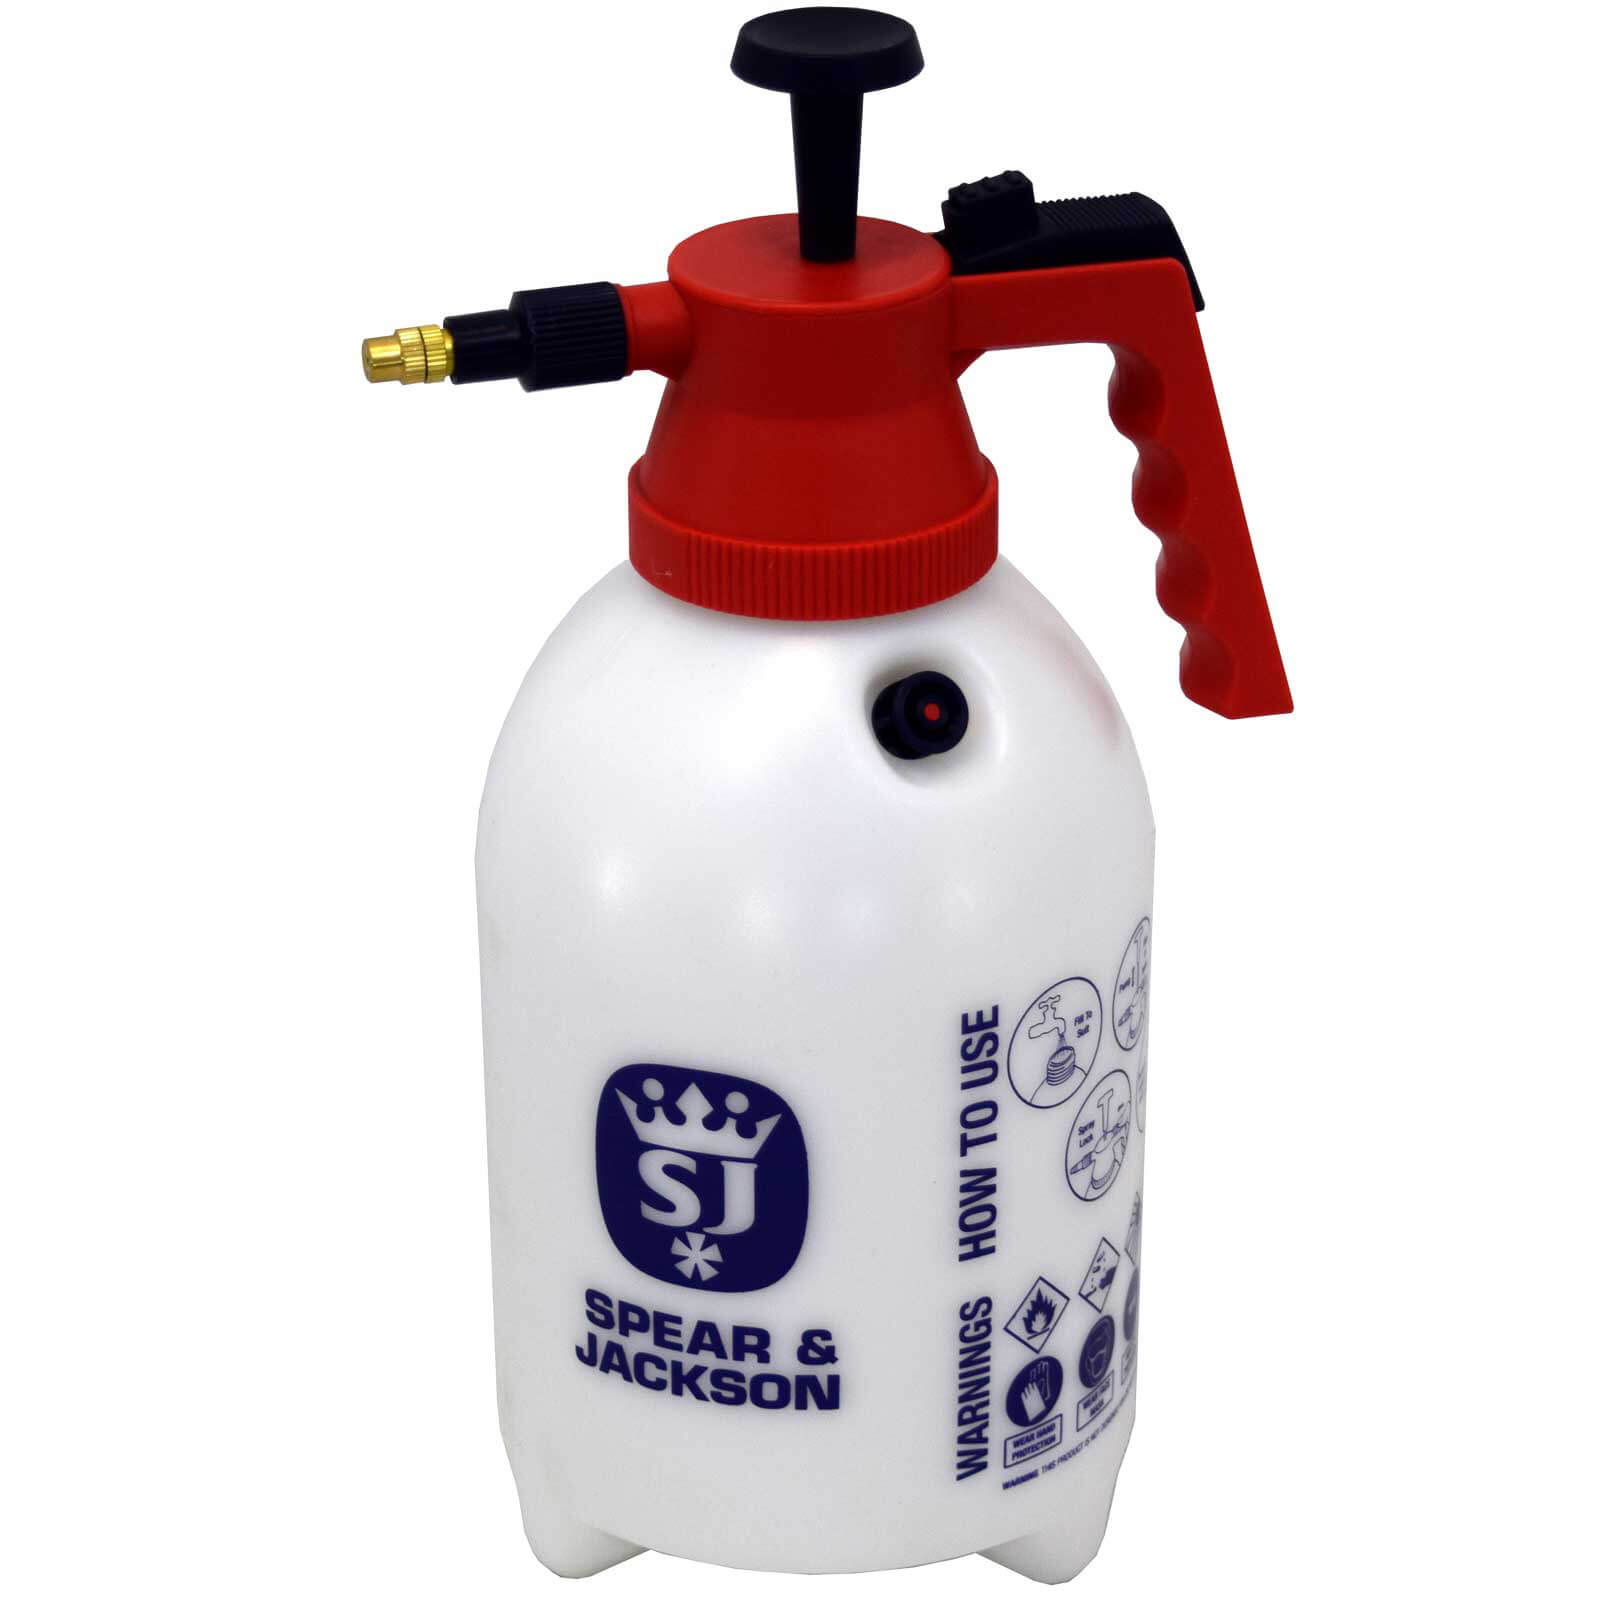 Spear and Jackson Handheld Pump Action Pressure Sprayer 2l